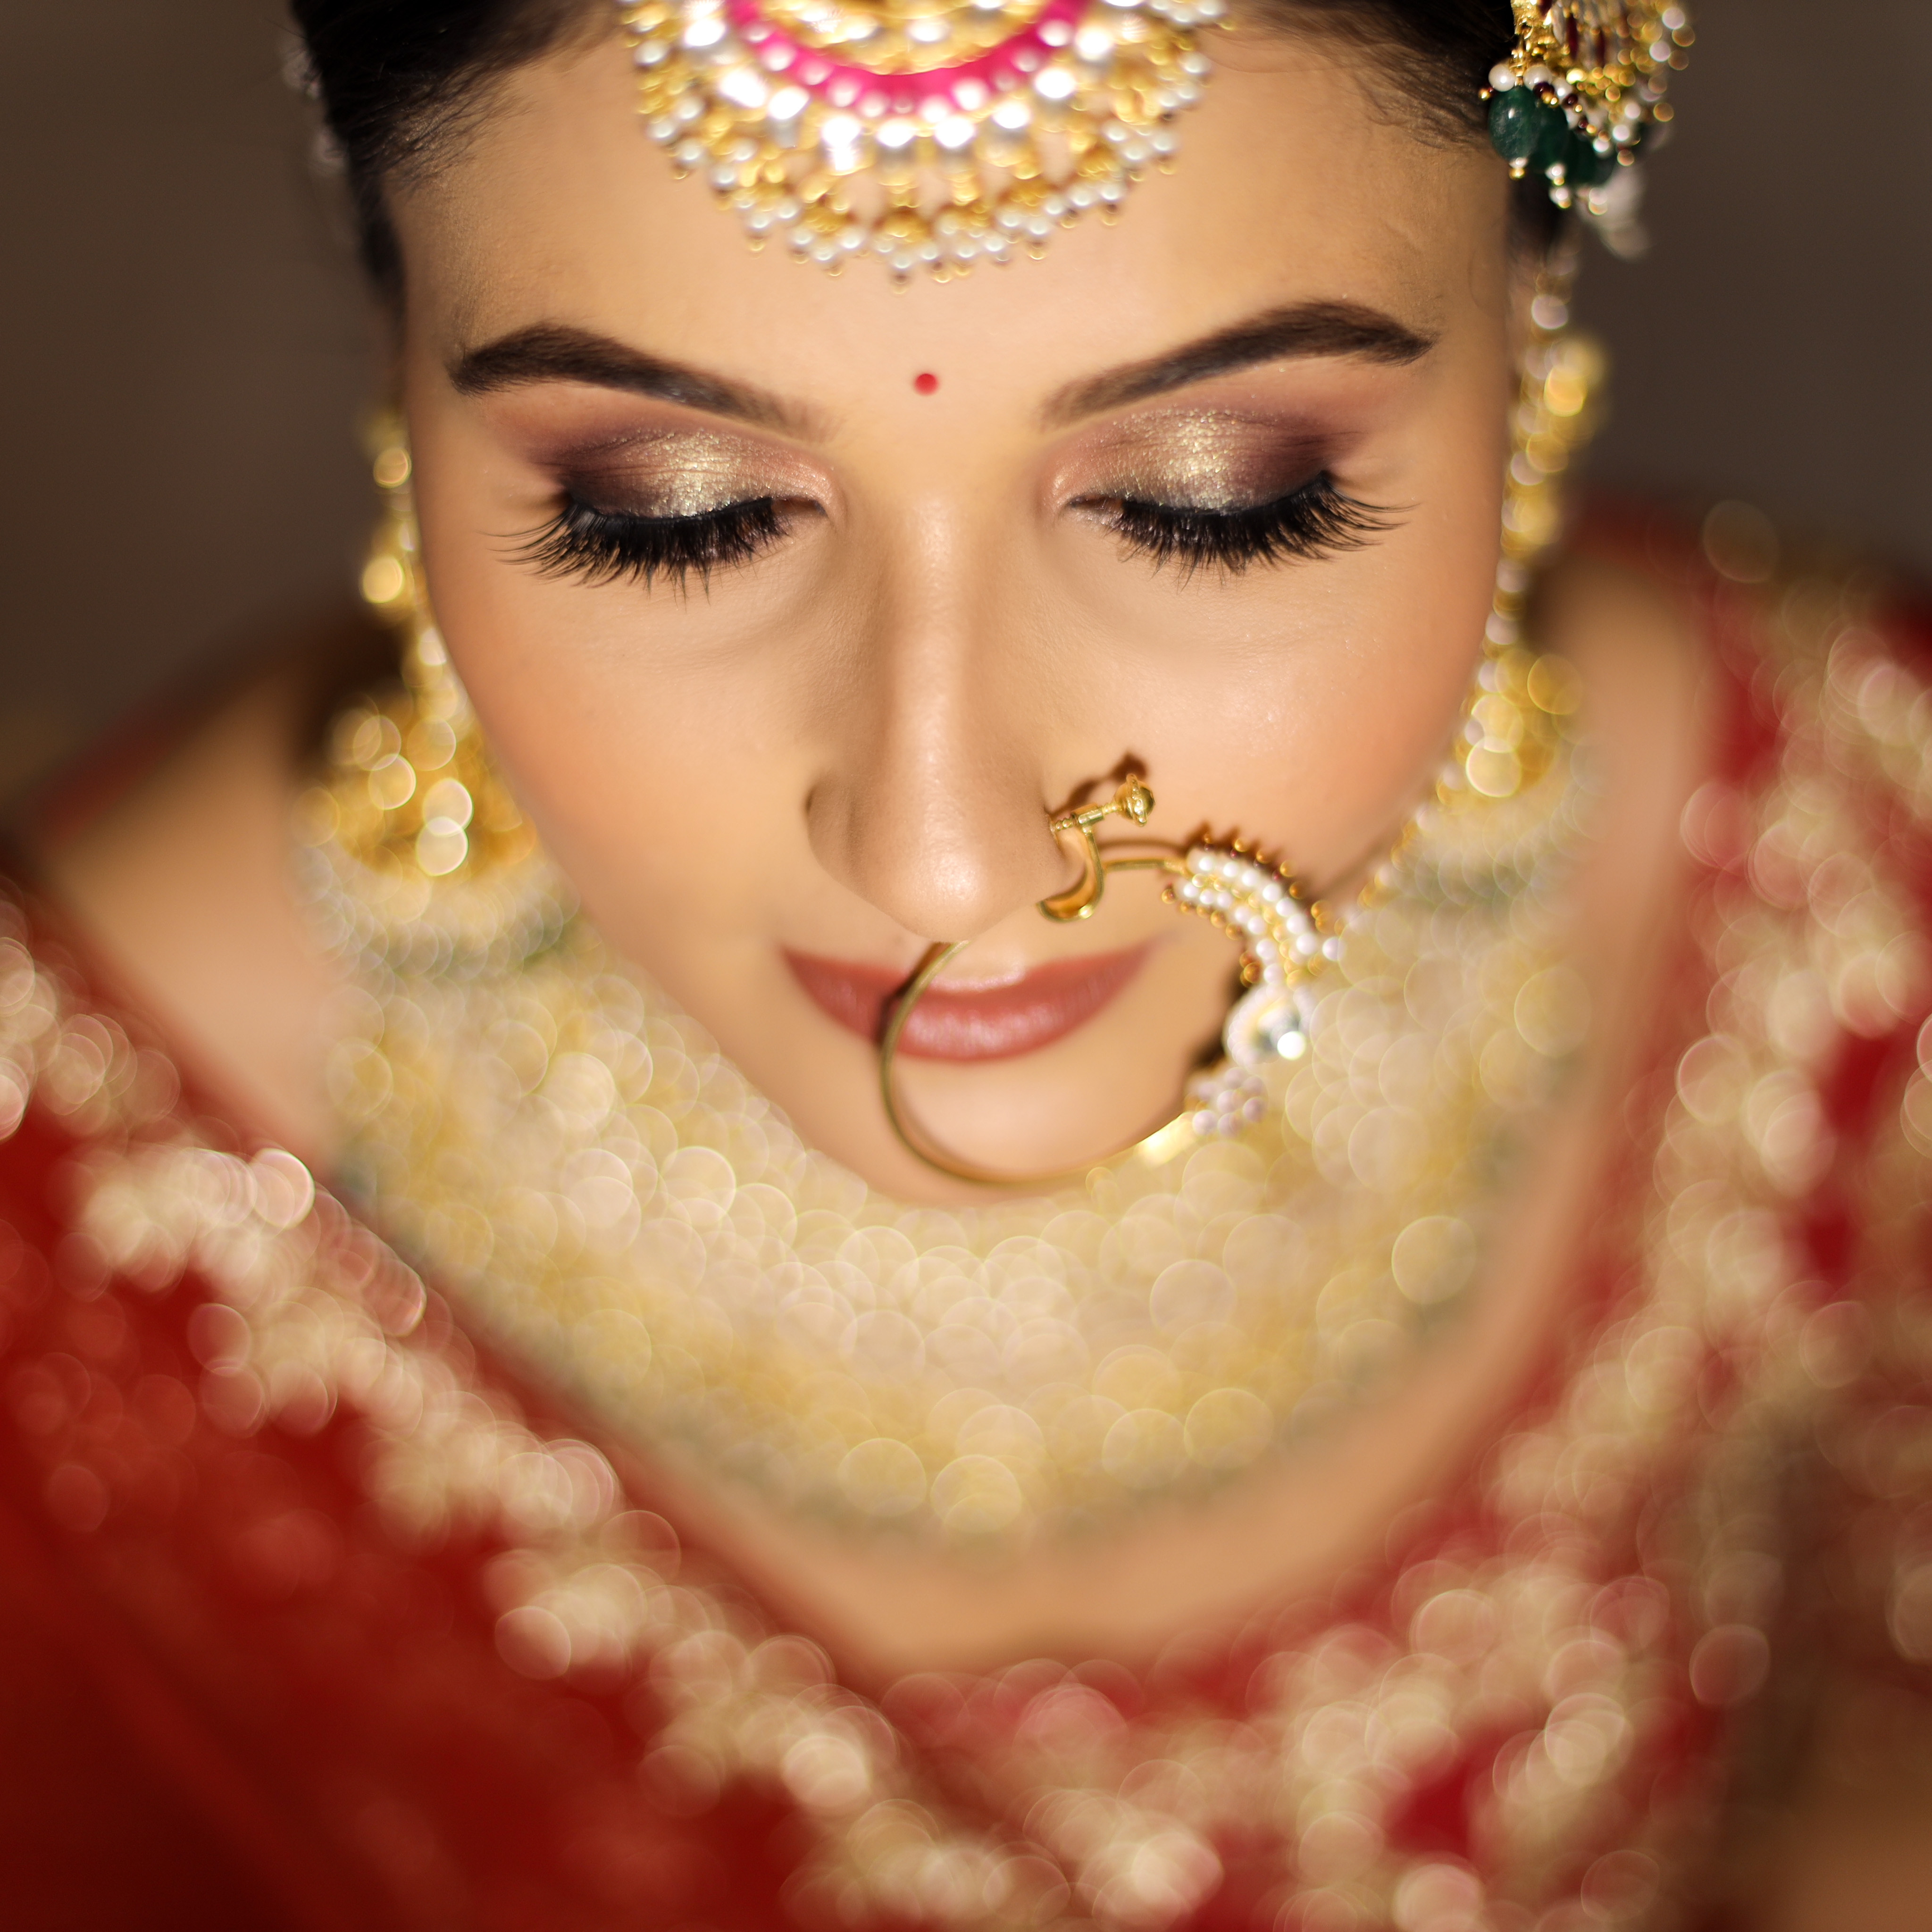 bridal eye makeup